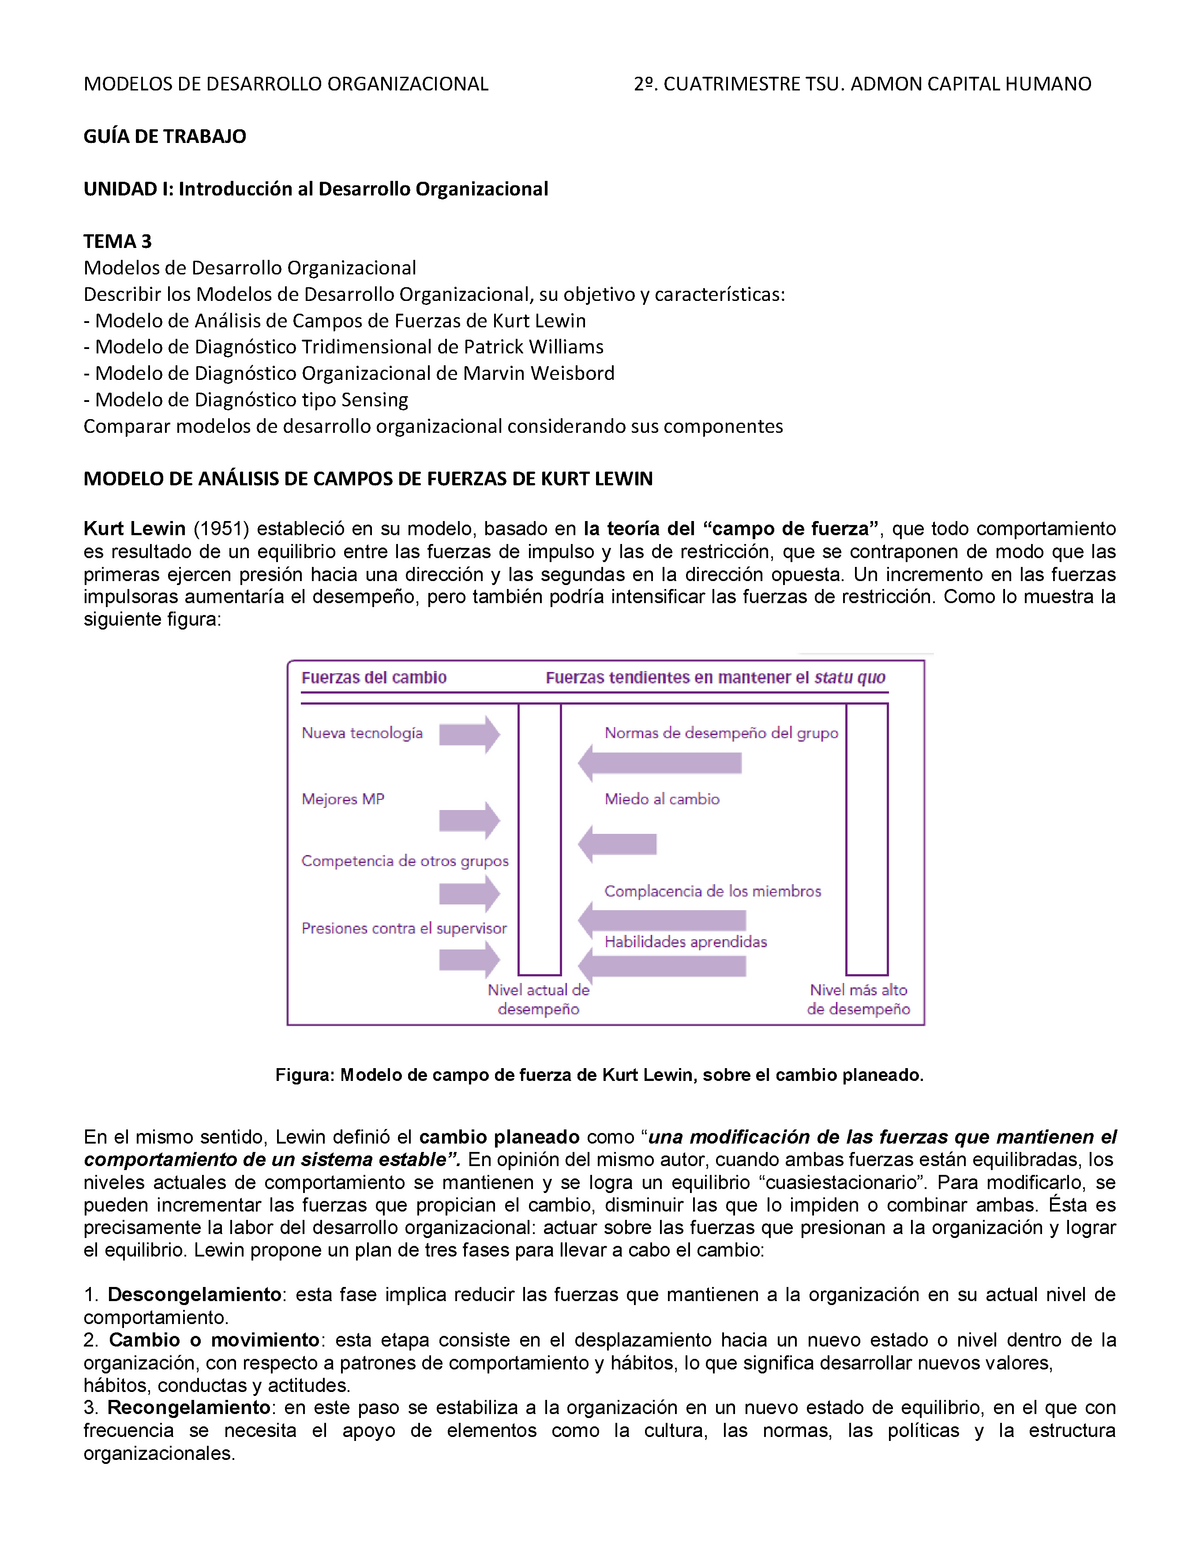 GUIA Modelos DE Desarollo Organizacional Unidad I 2da Parte - MODELOS DE  DESARROLLO ORGANIZACIONAL - Studocu